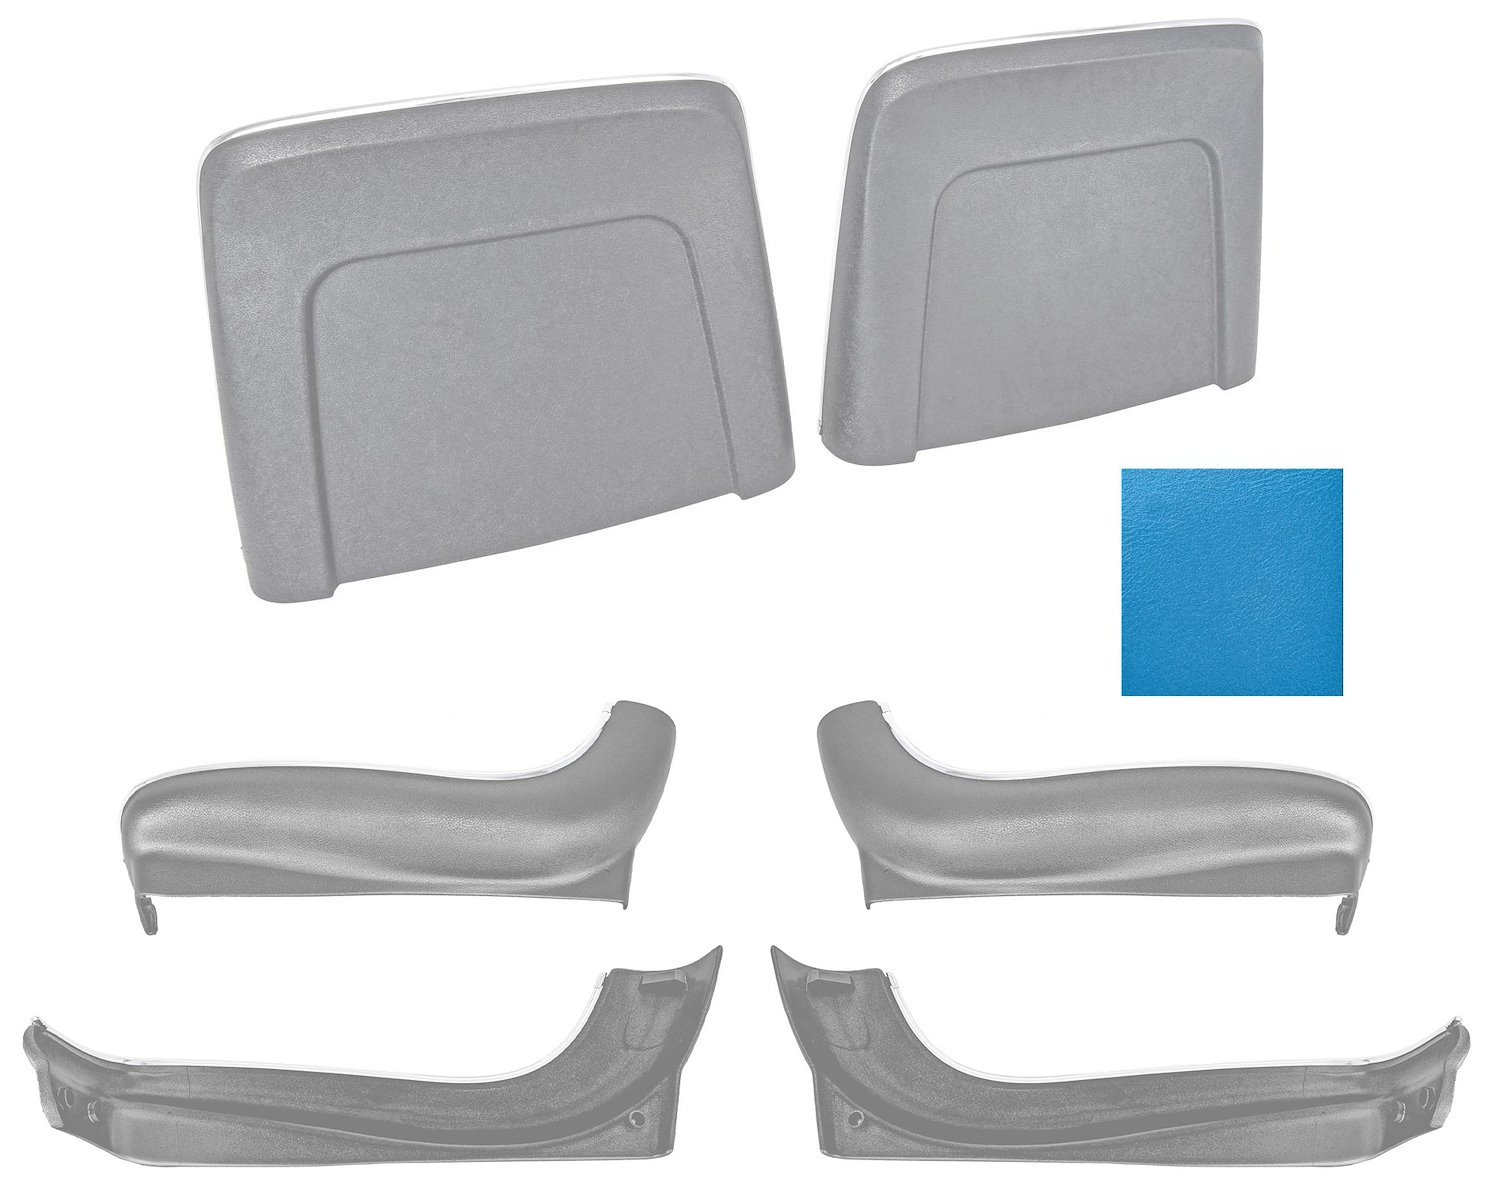 Seat Backs & Sides Kit Fits Select 1966 GM Models [Bright Blue]